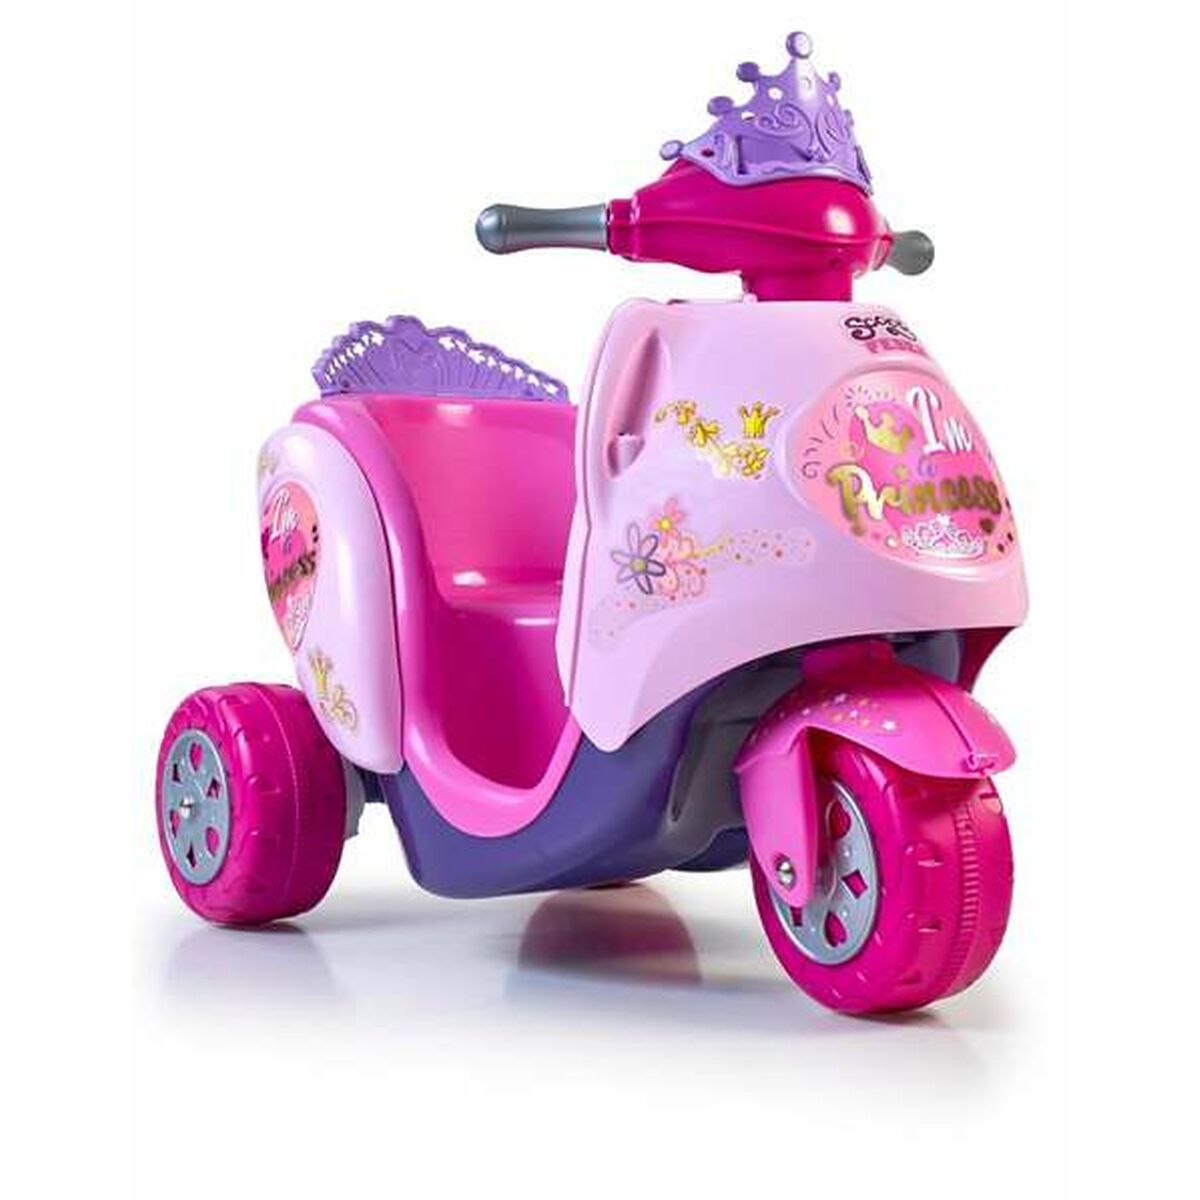 Moto Correpasillos Princesses Disney Neox 